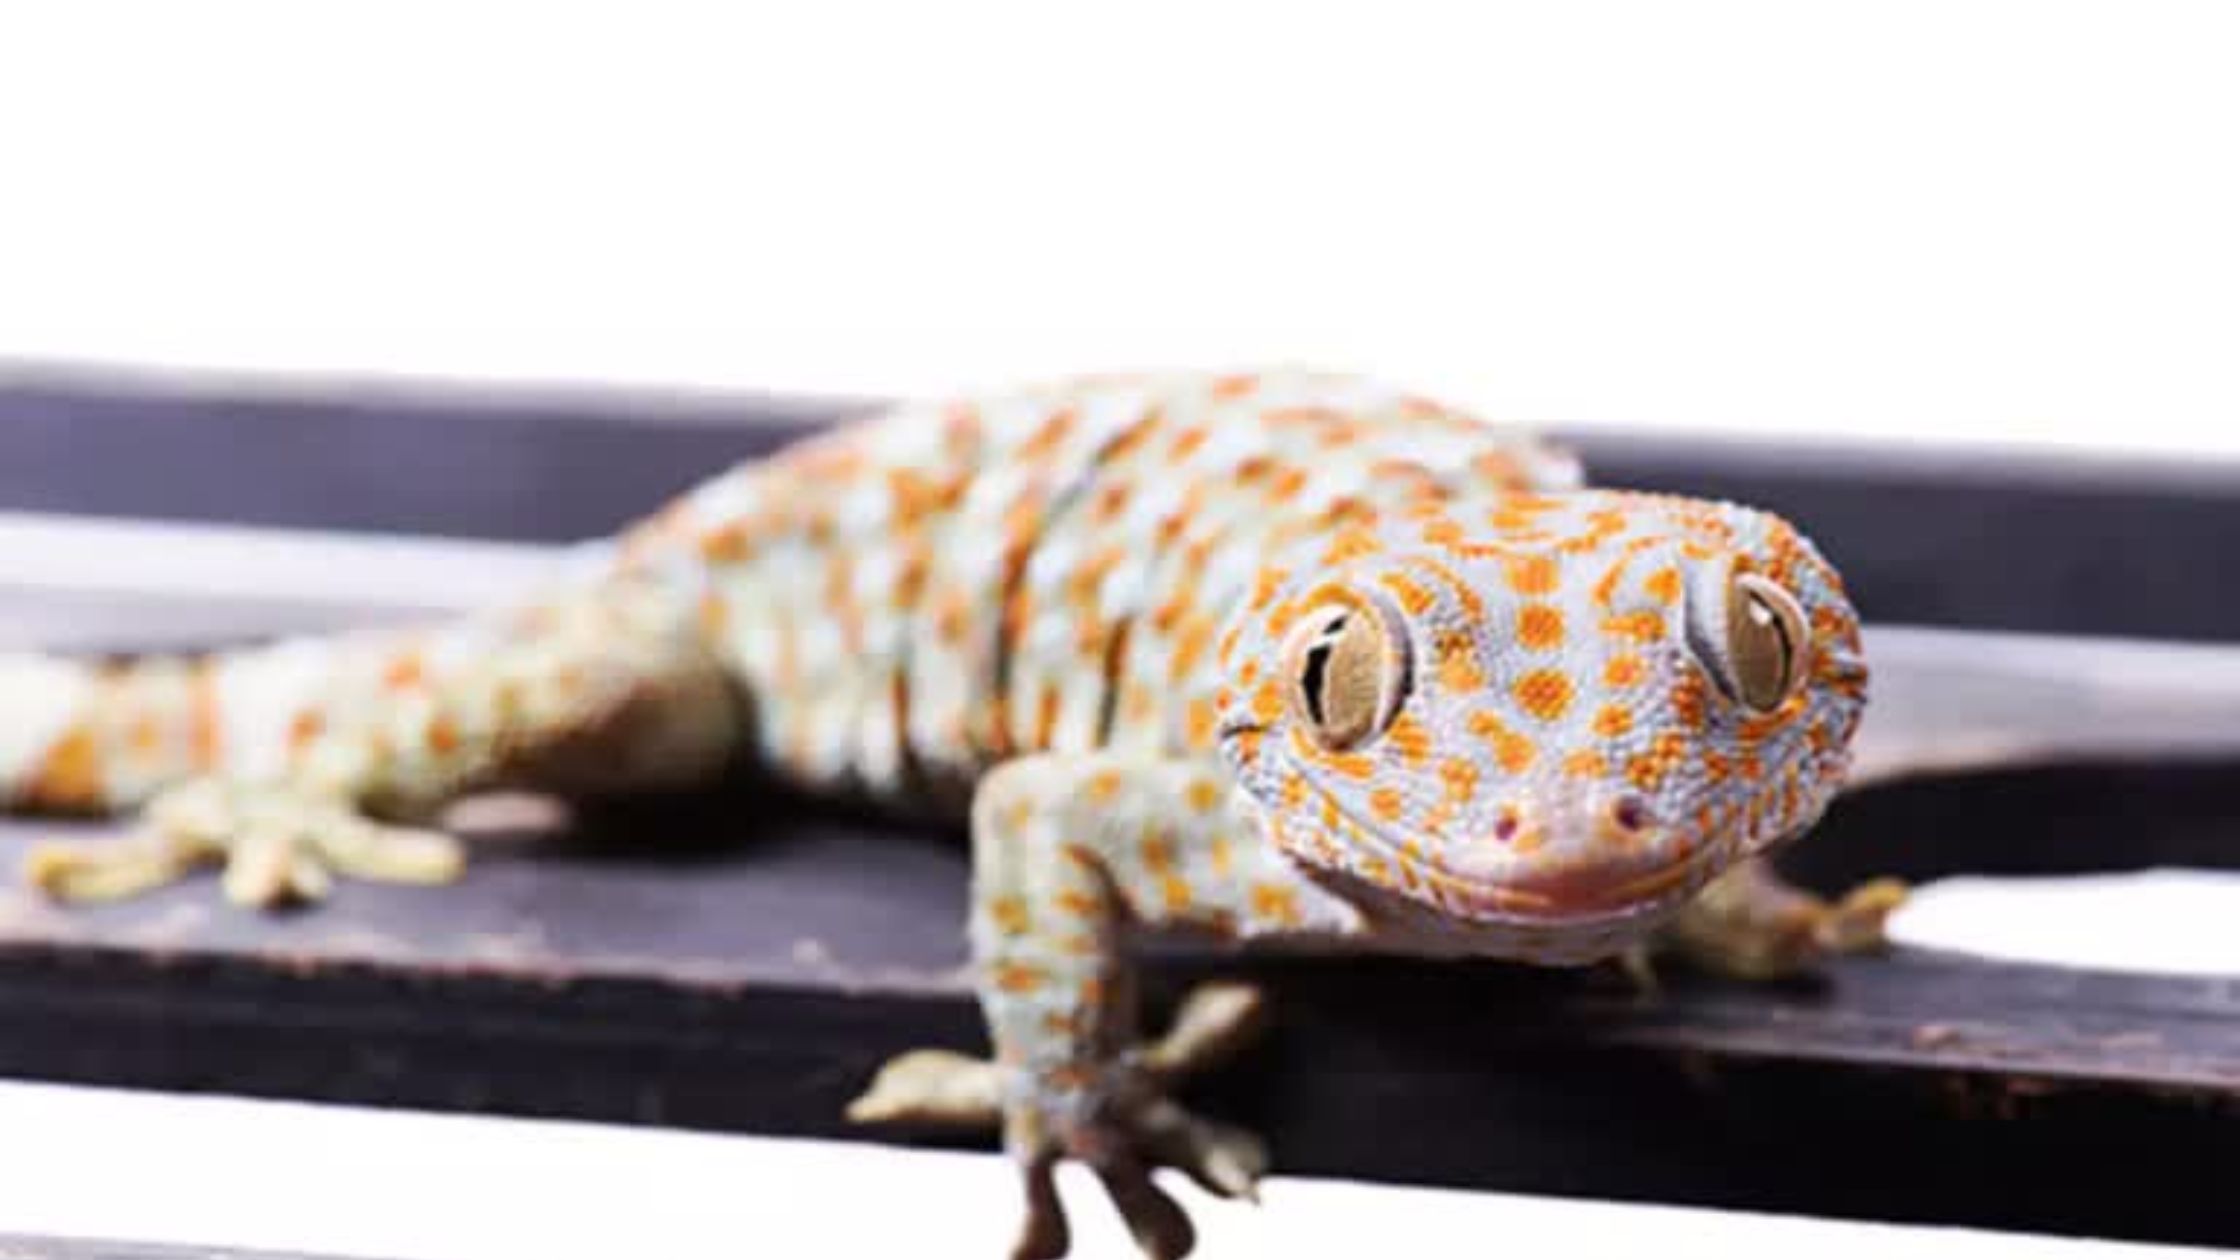 Lizard worth one crore found in Bihar